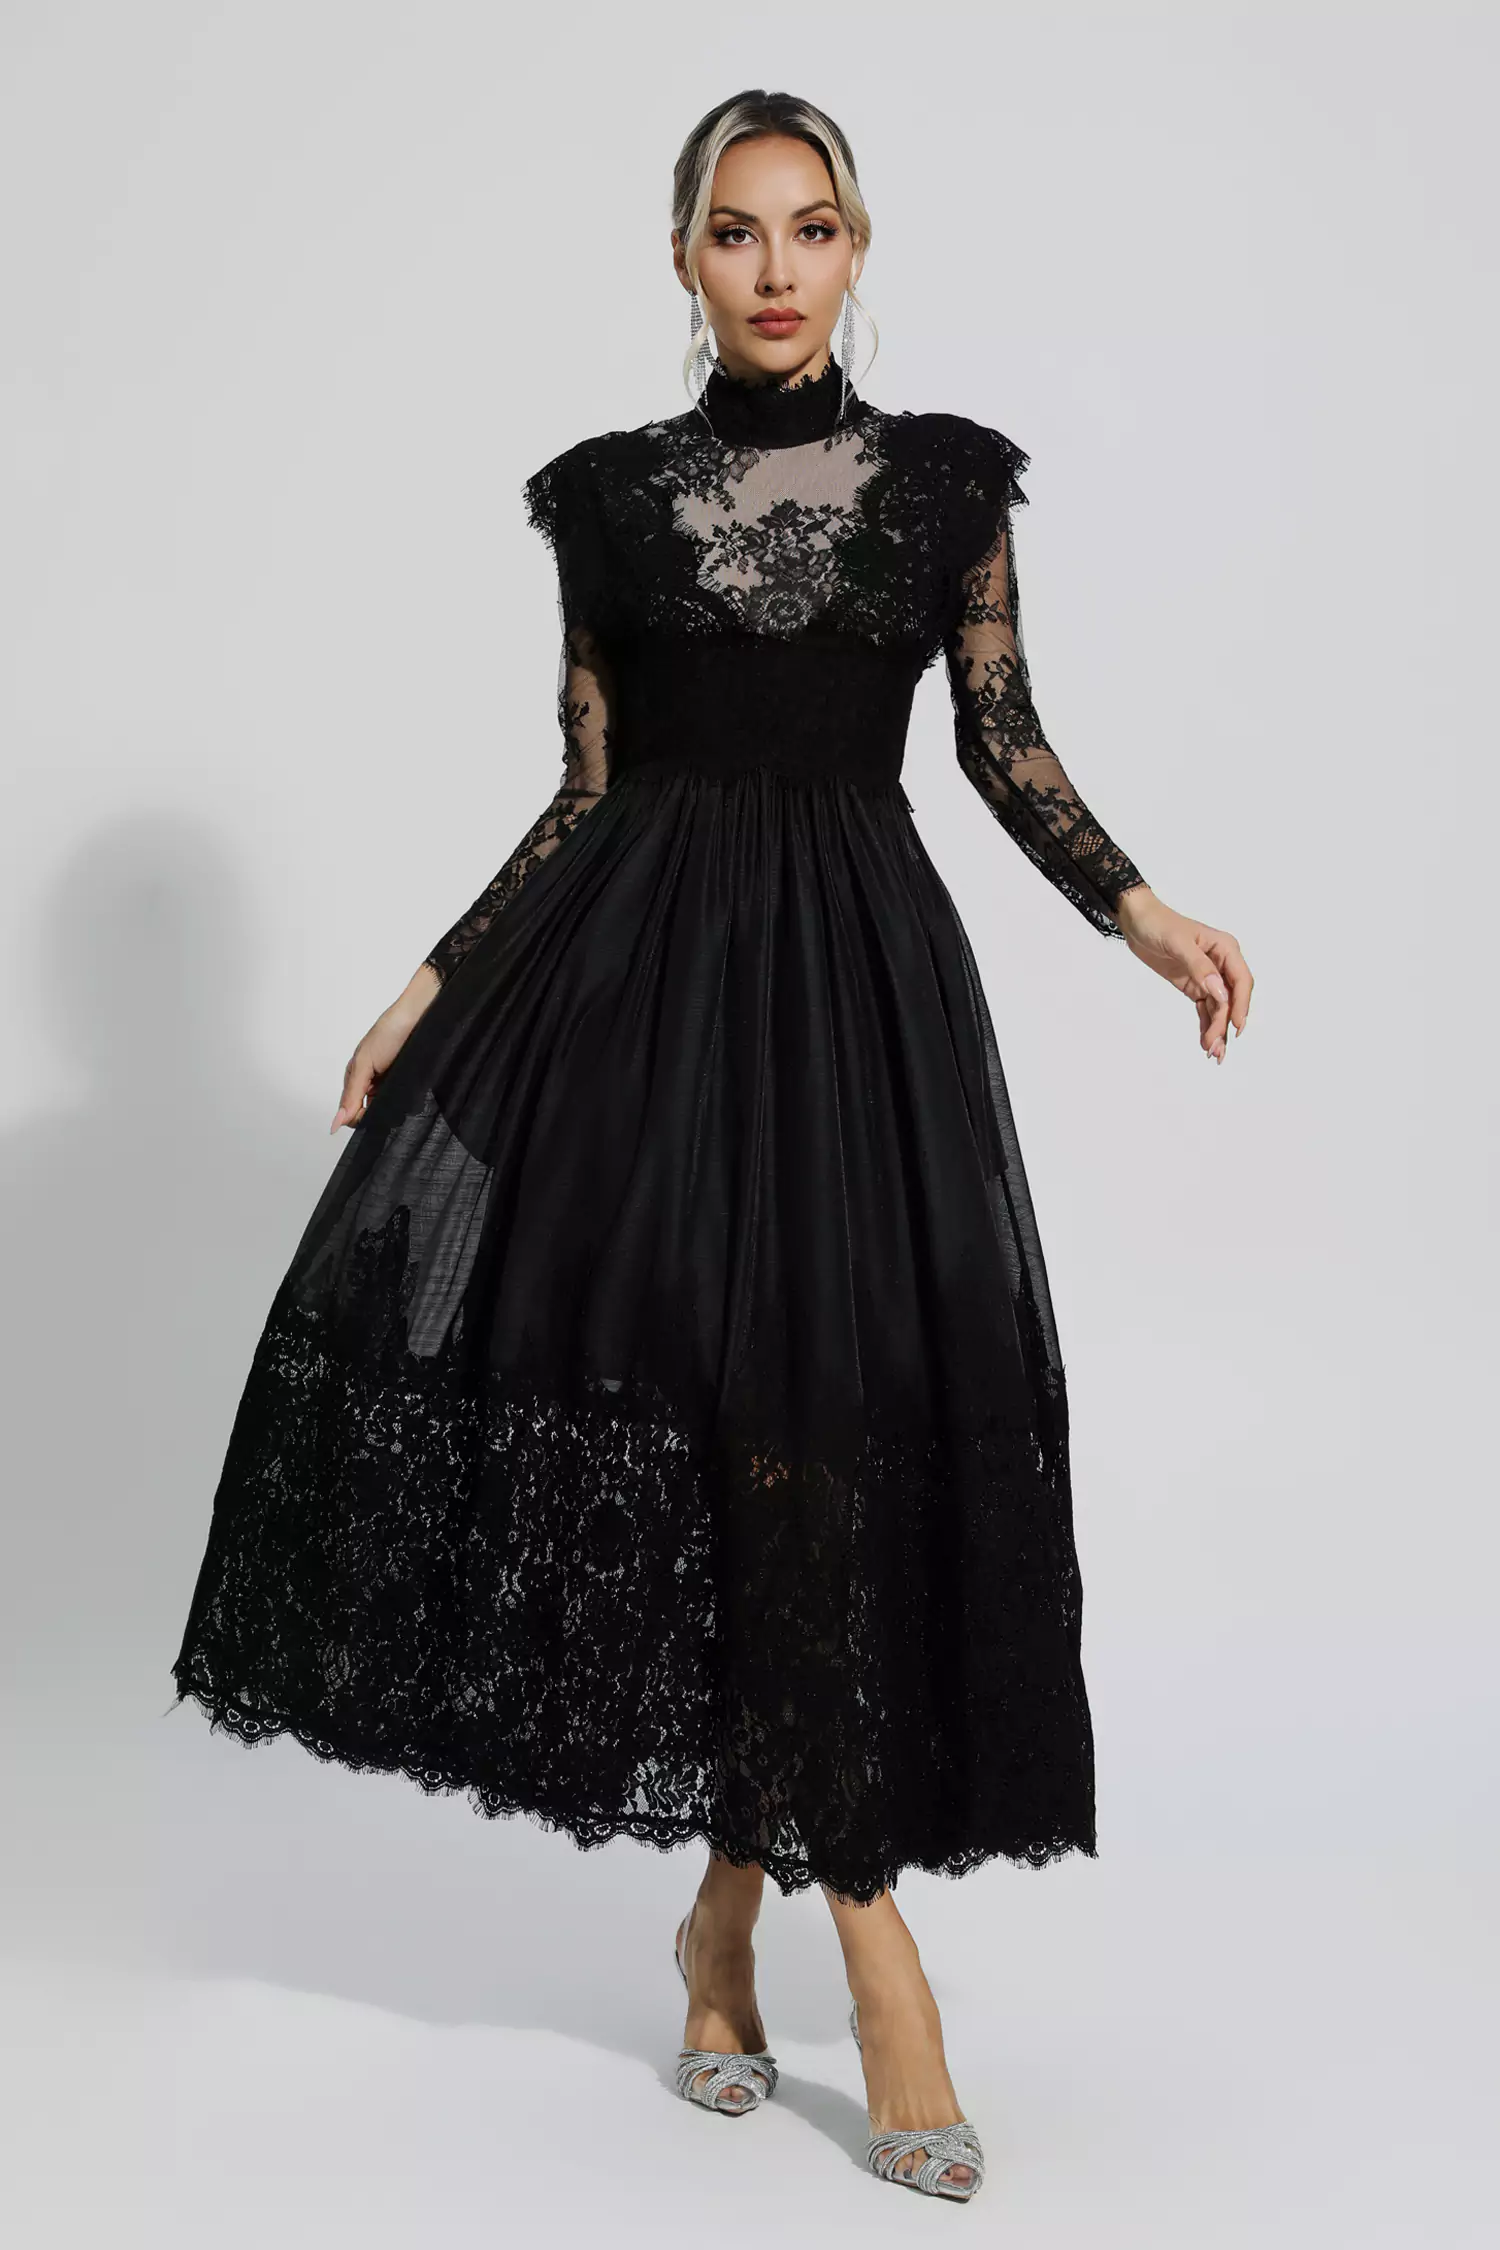 Spree Dress - Black  Fashion dresses, Long black dress, Black dress